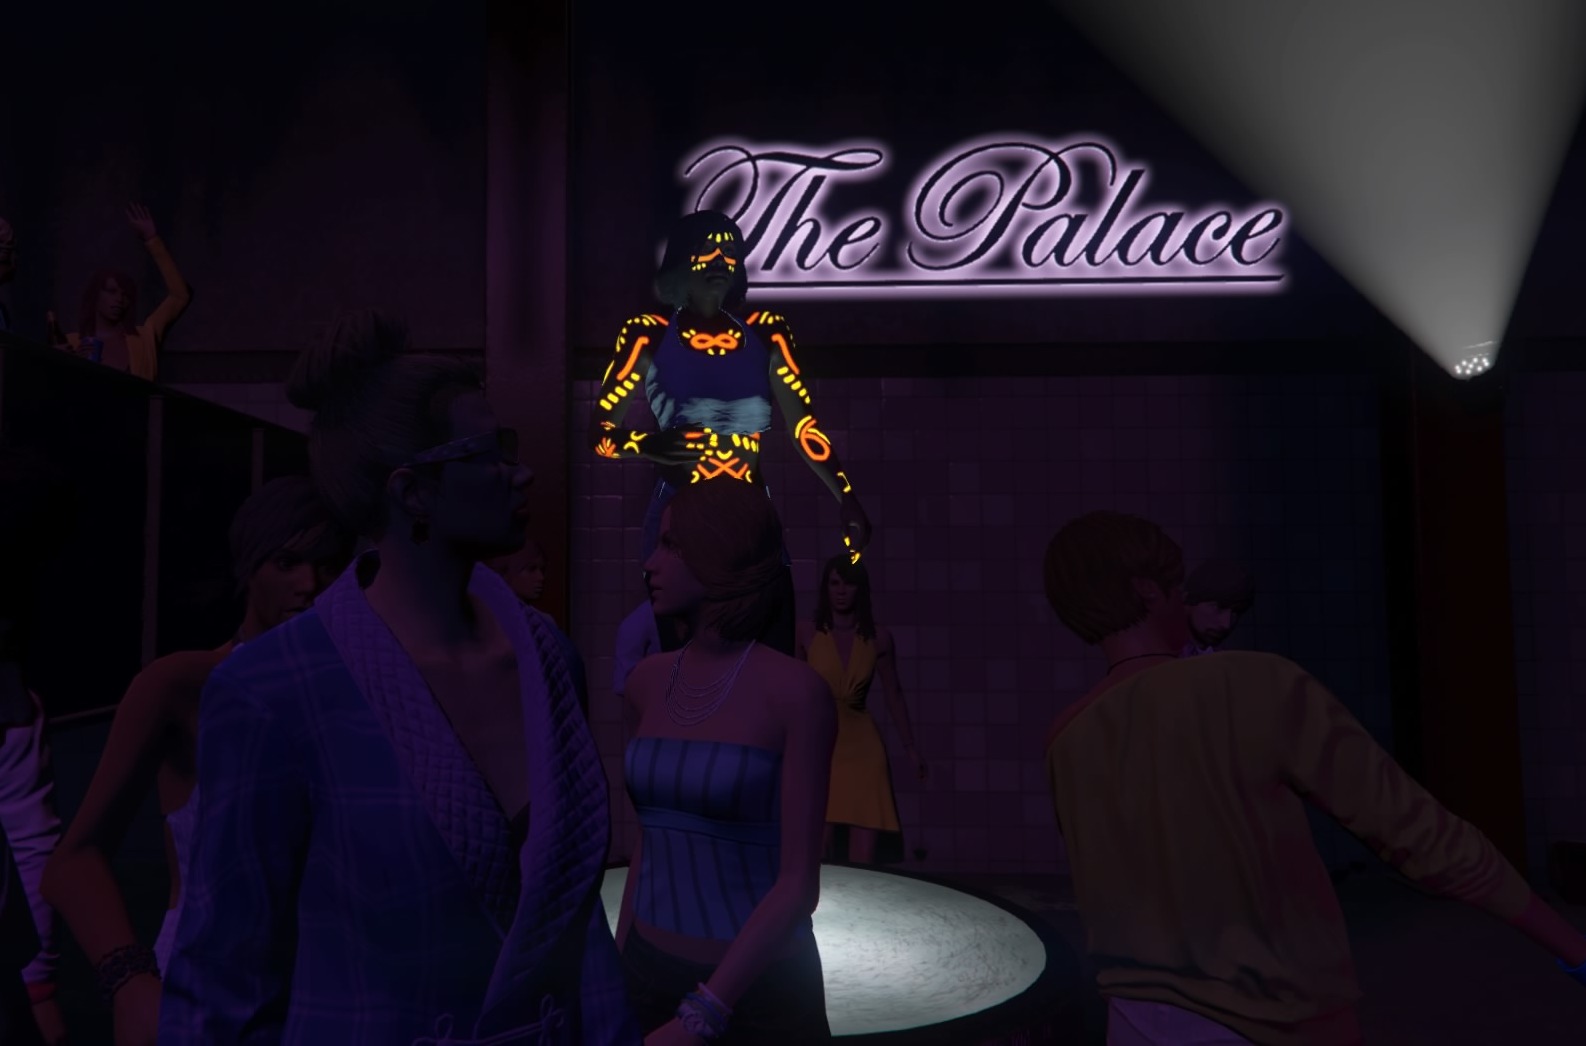 The Palace Night Club